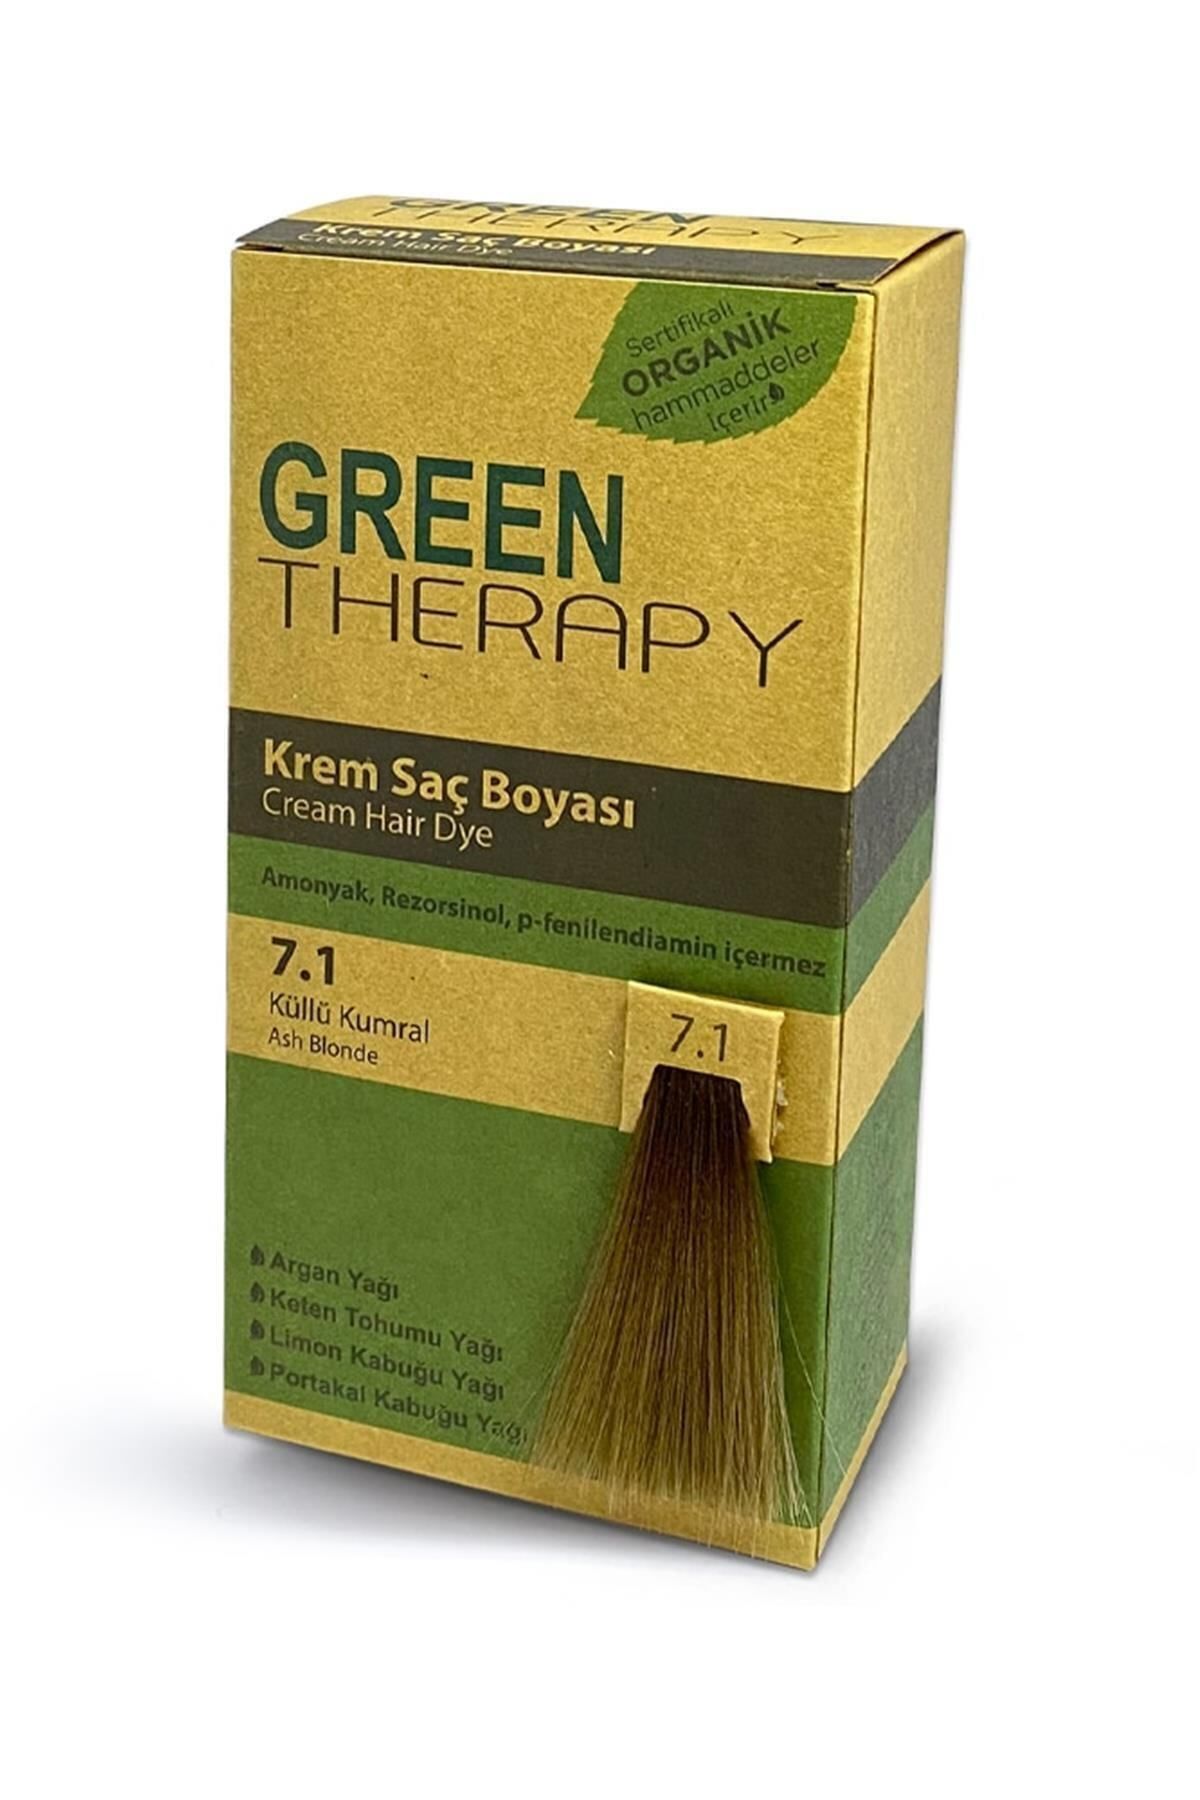 Green Therapy Brand: Cream Hair Dye 7.1 Ashy Auburn Category: Hair Dye N.Beauty149